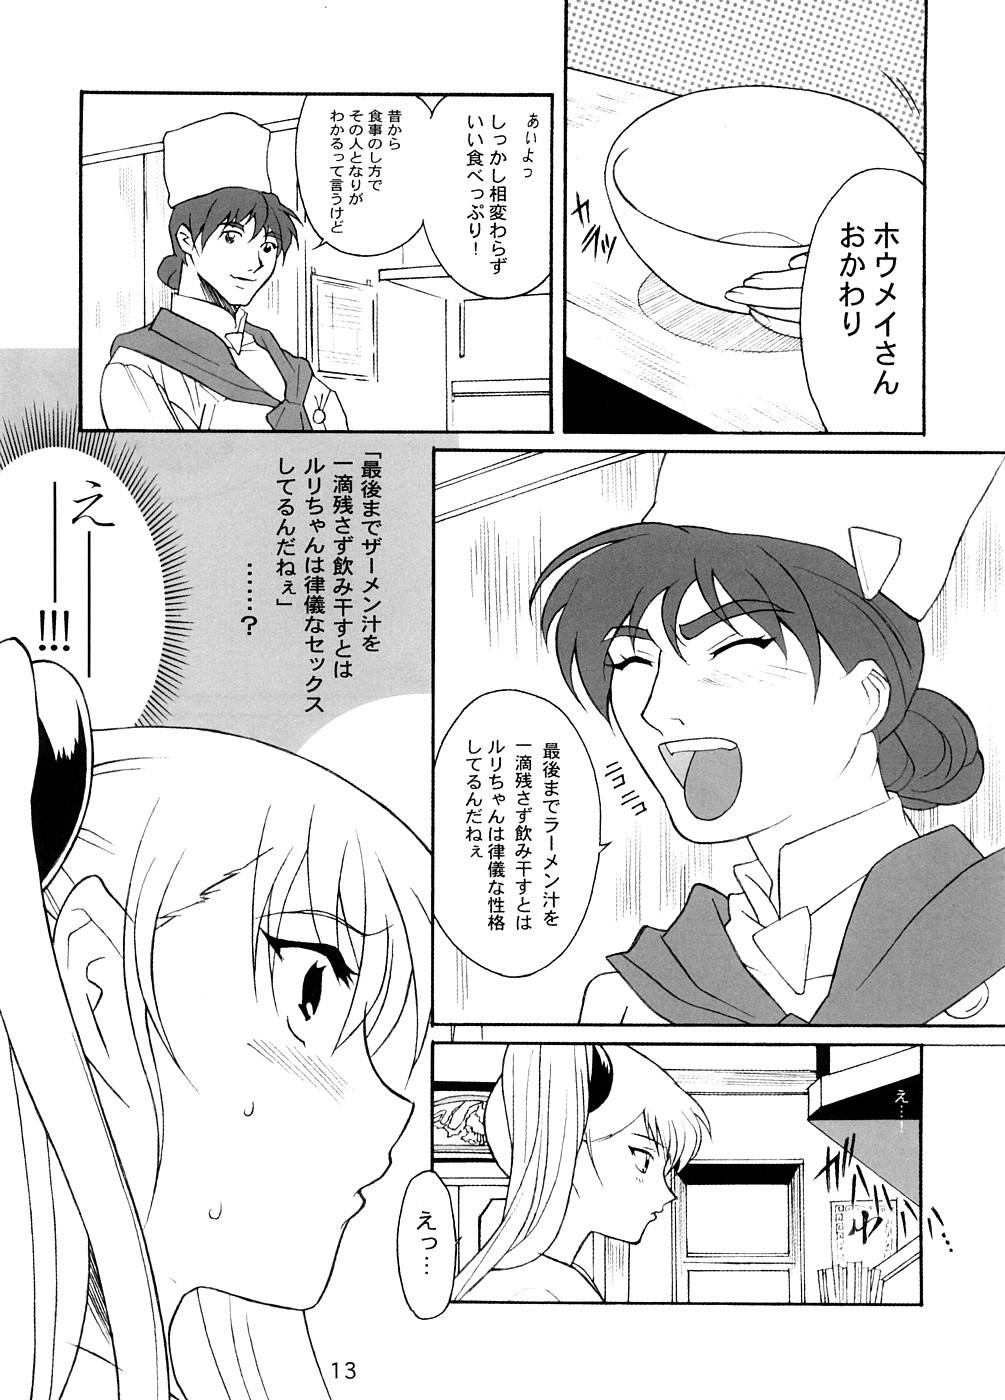 Kashima RURI MOE 8 - Martian successor nadesico Uncensored - Page 12